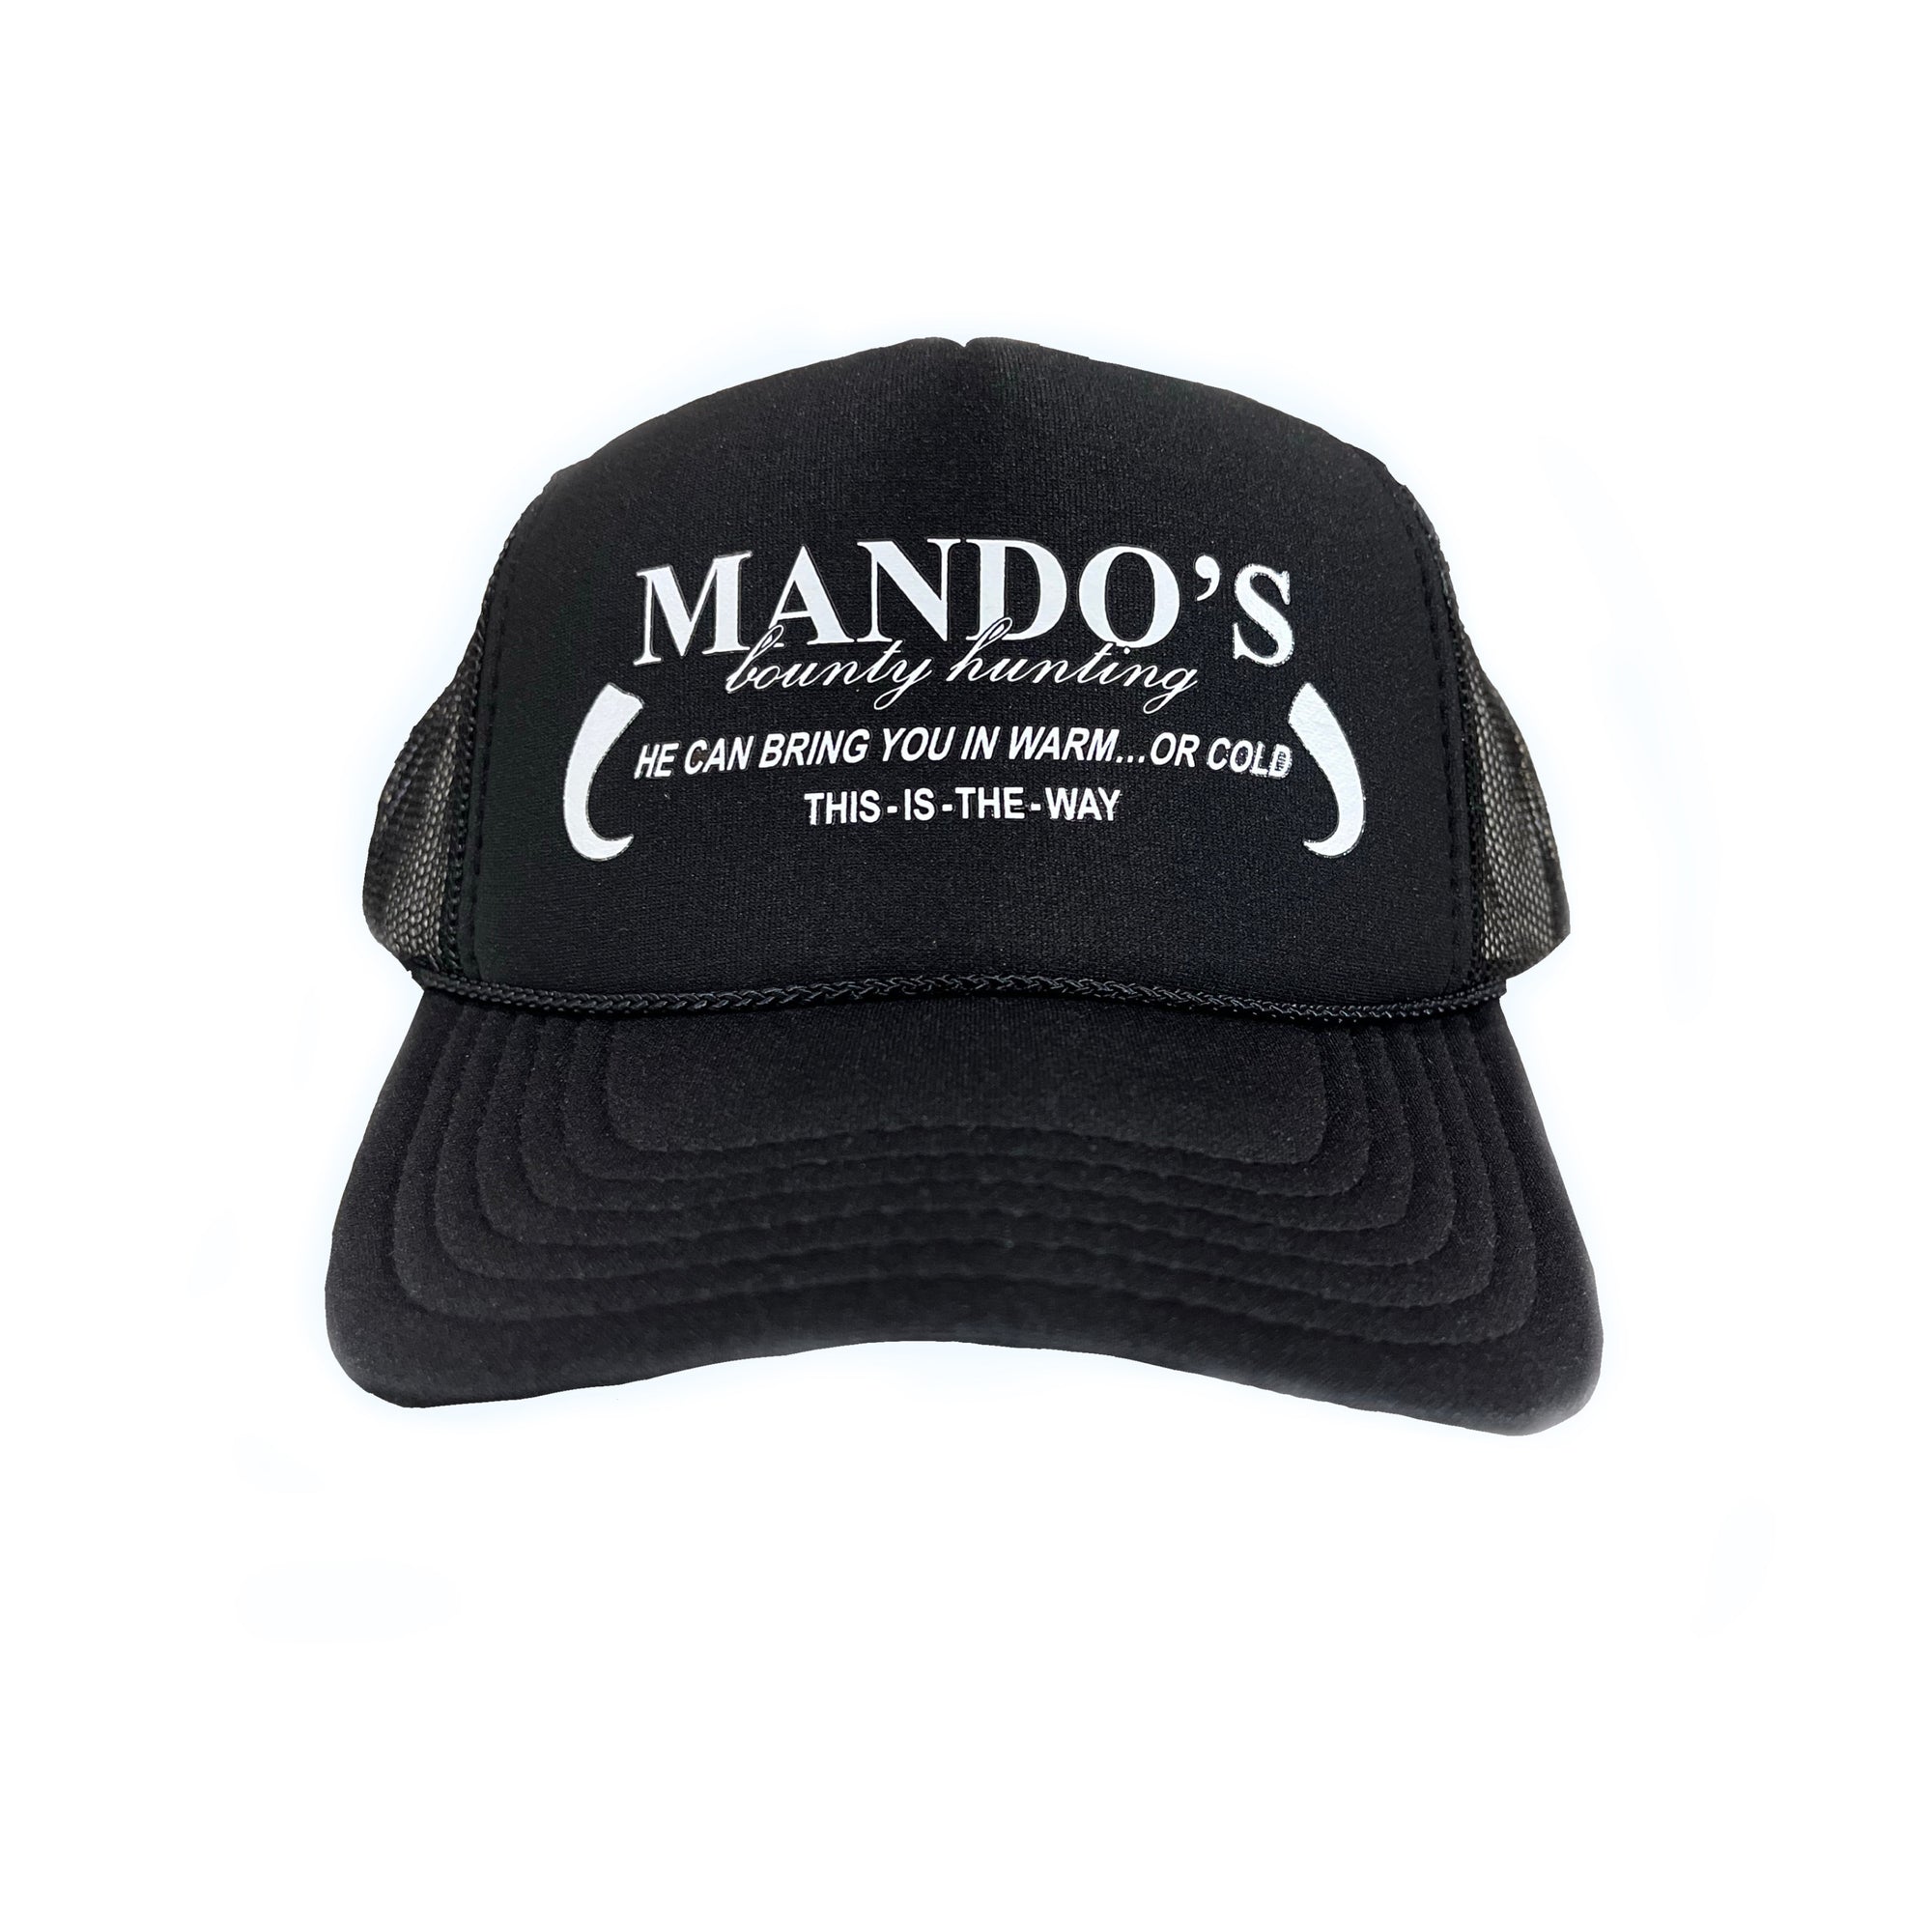 Mando's Bounty Hunting Hat